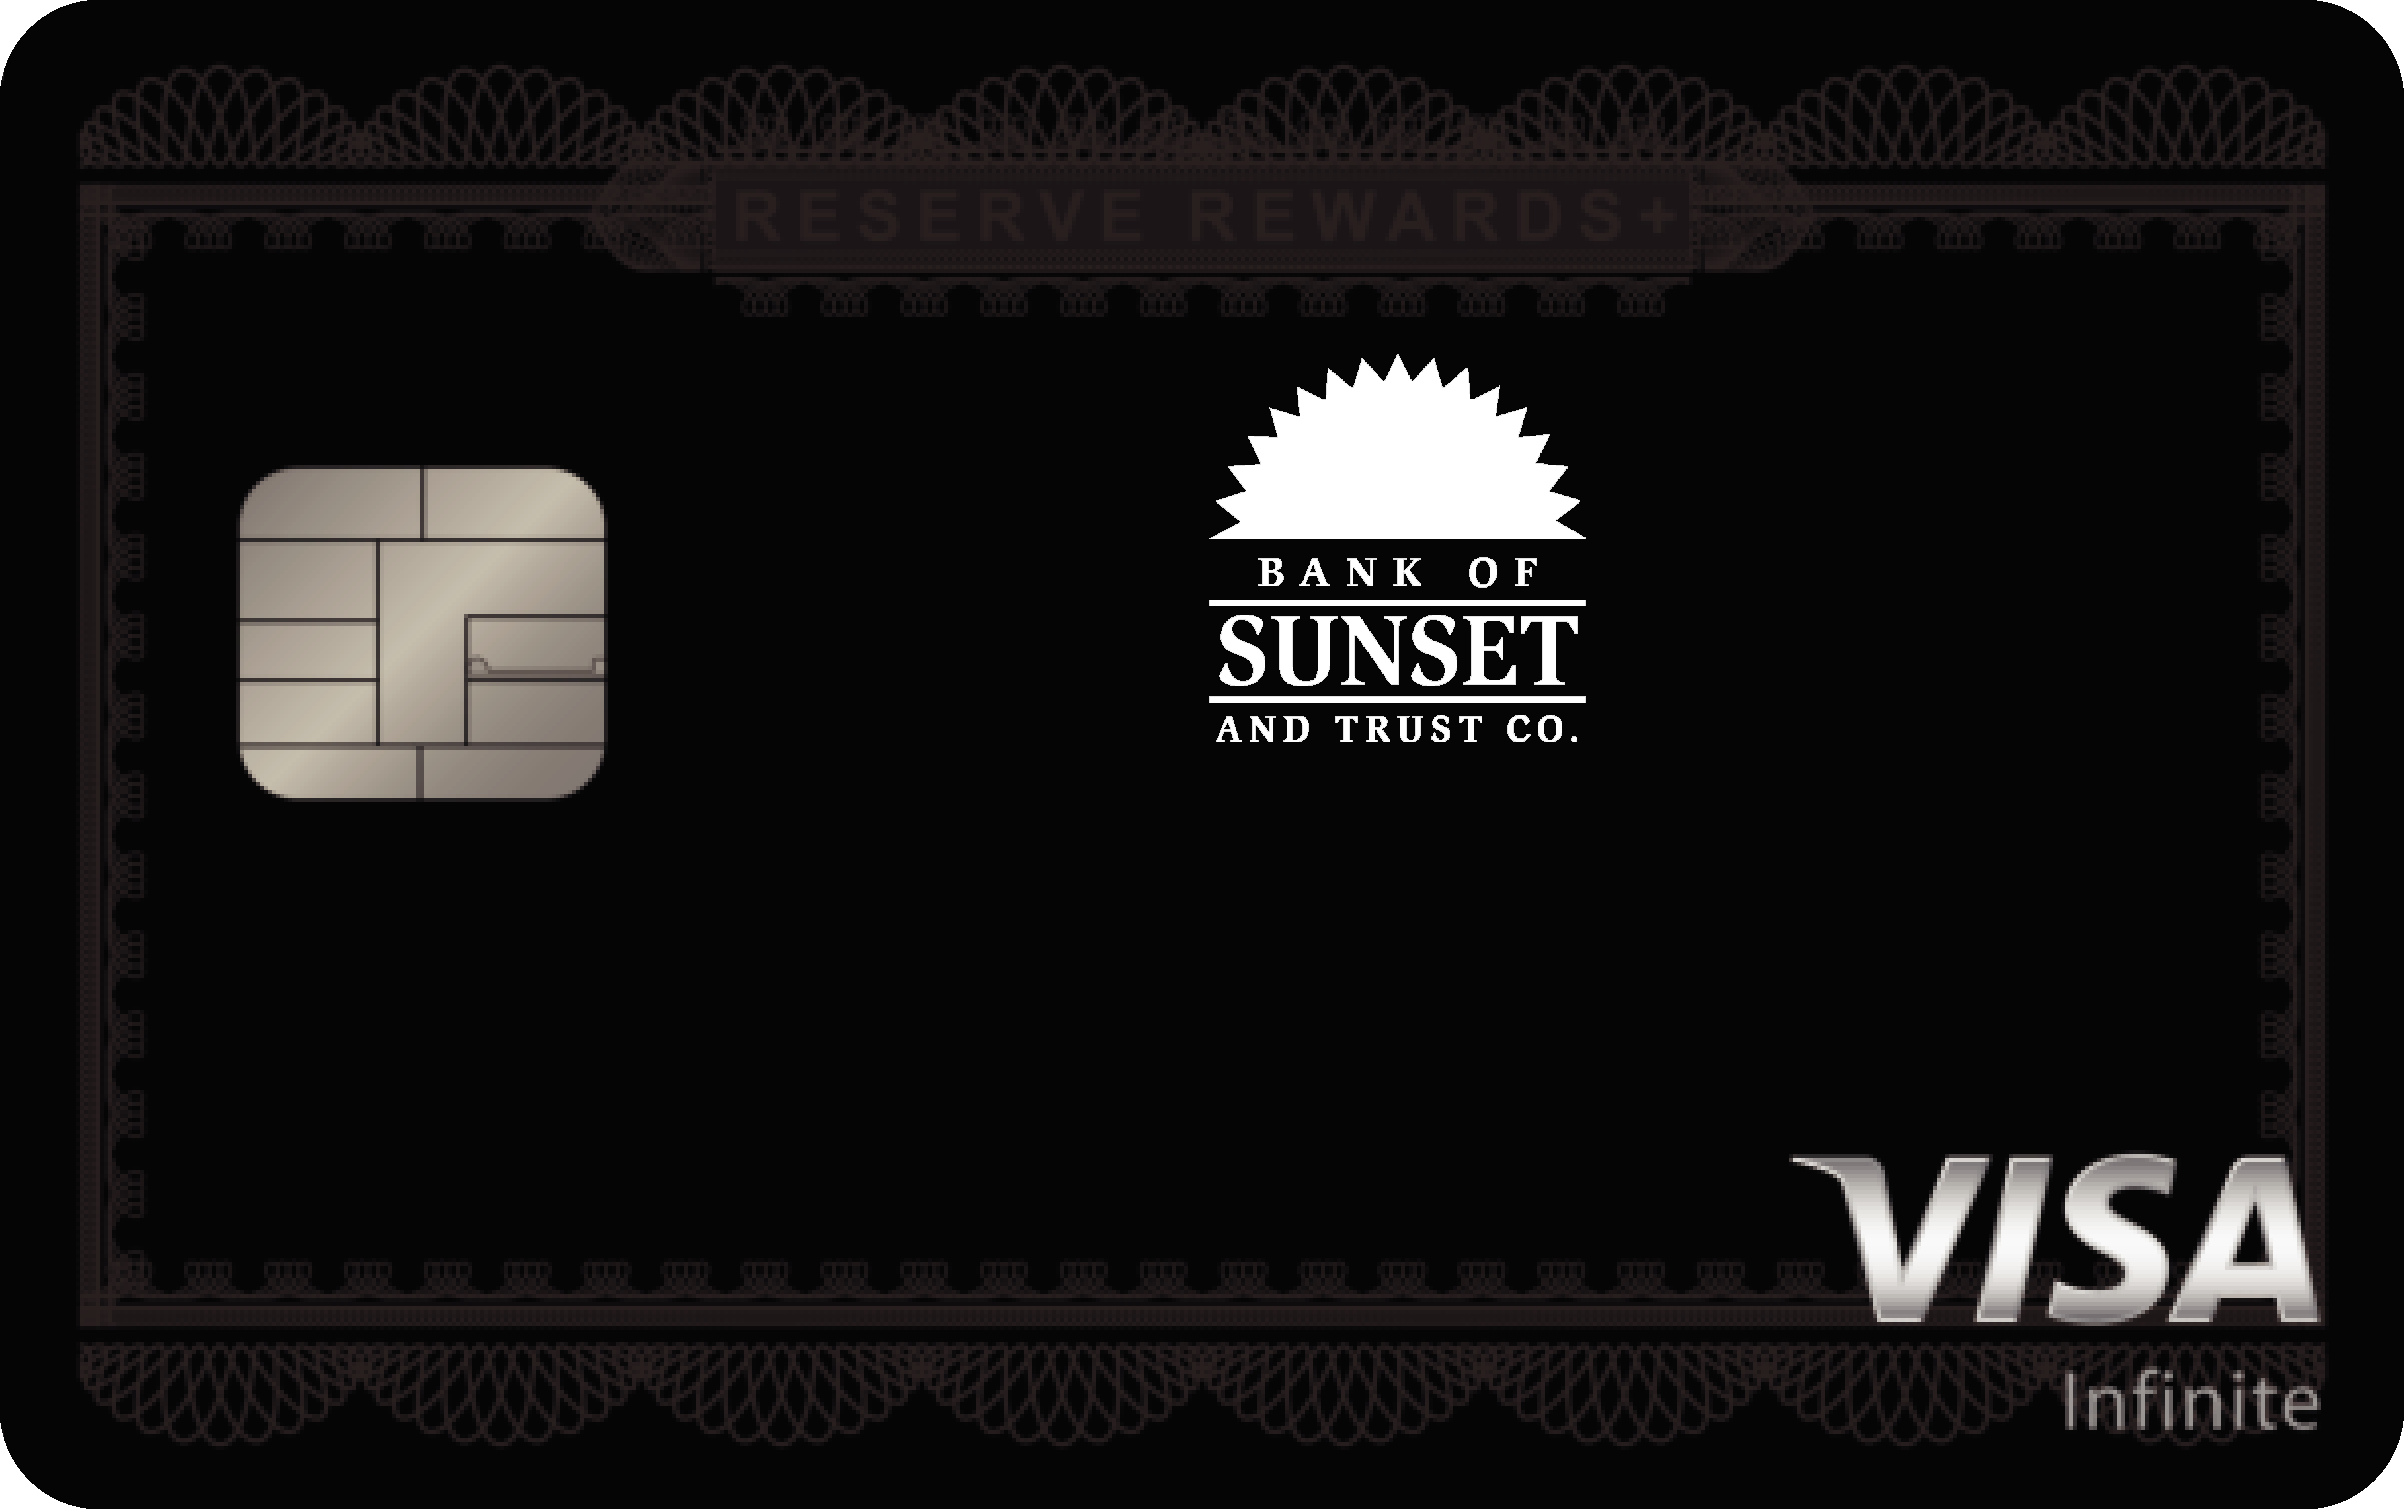 Bank of Sunset